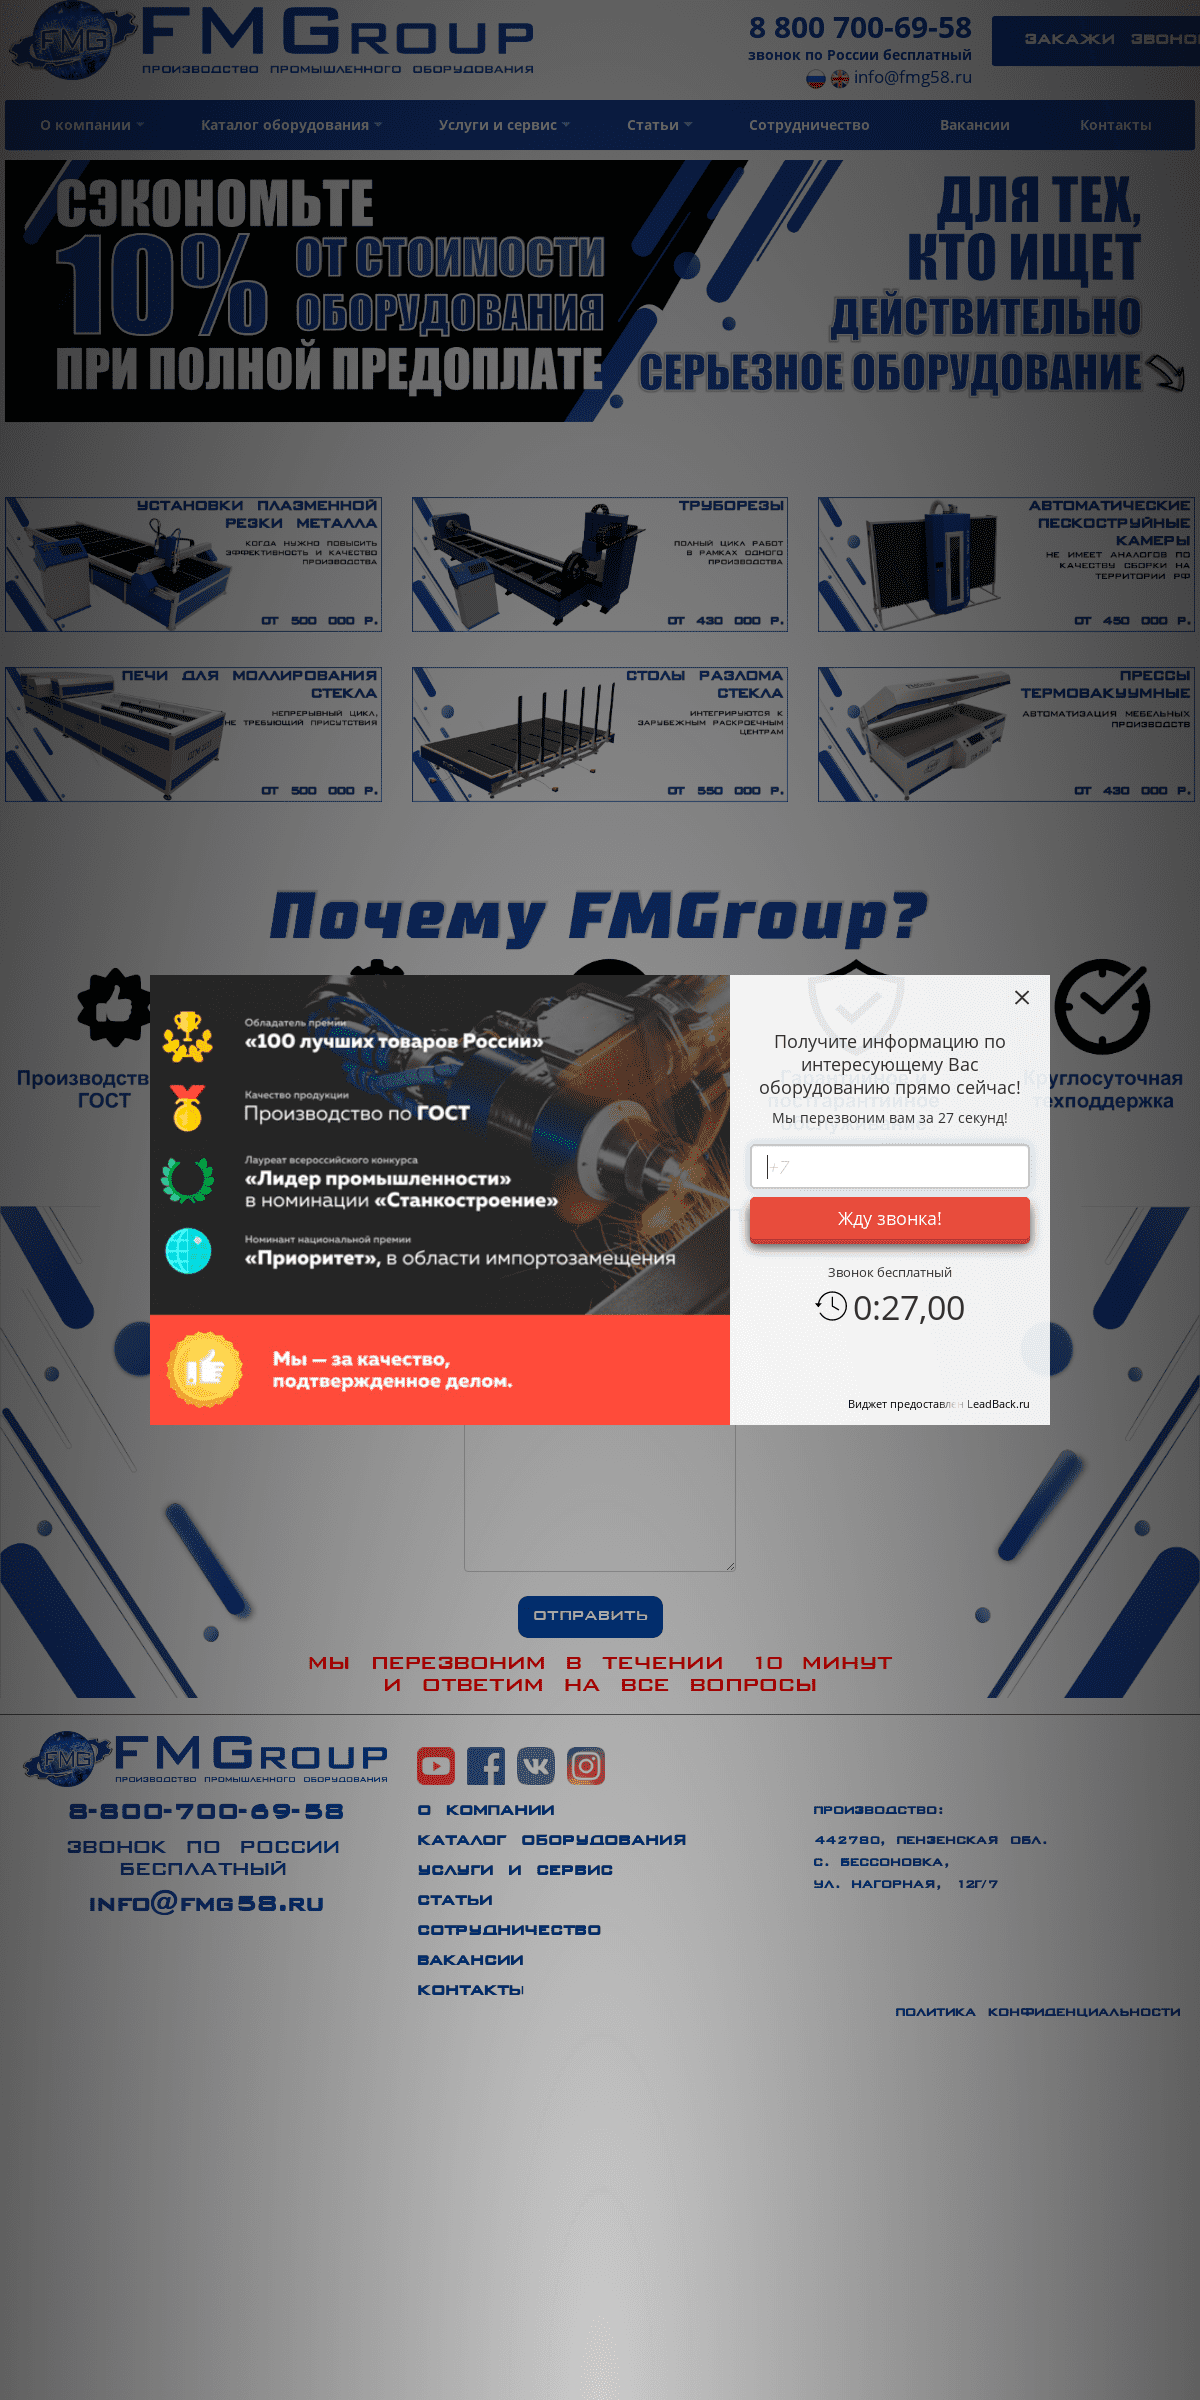 A complete backup of fmg58.ru